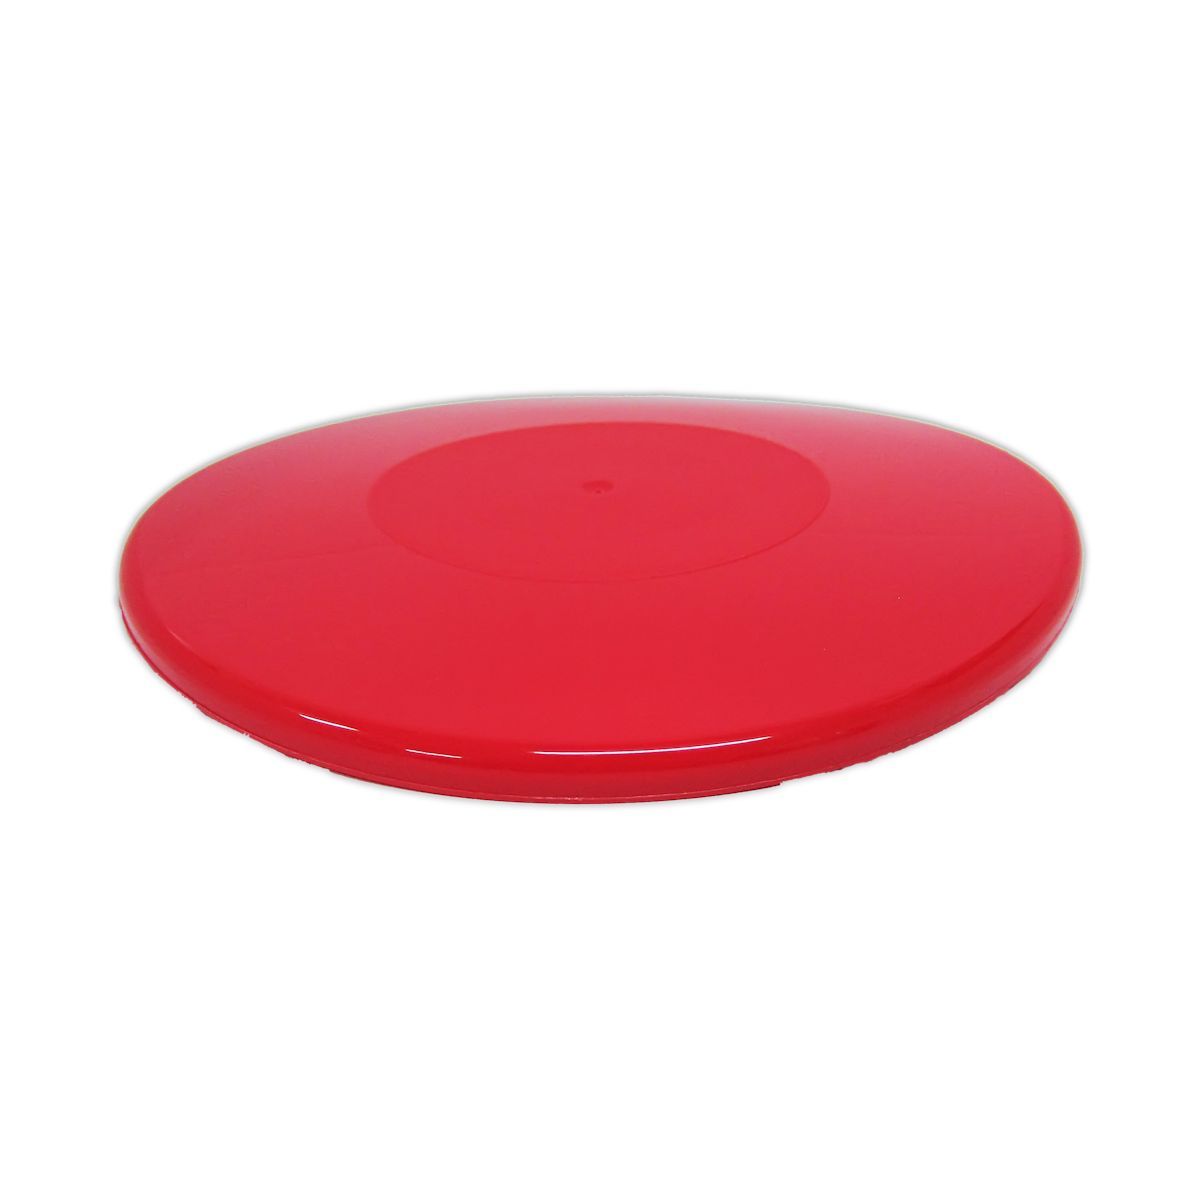 PUDB6618 - 1/4lb Red Pudding Bowl Lids x 90